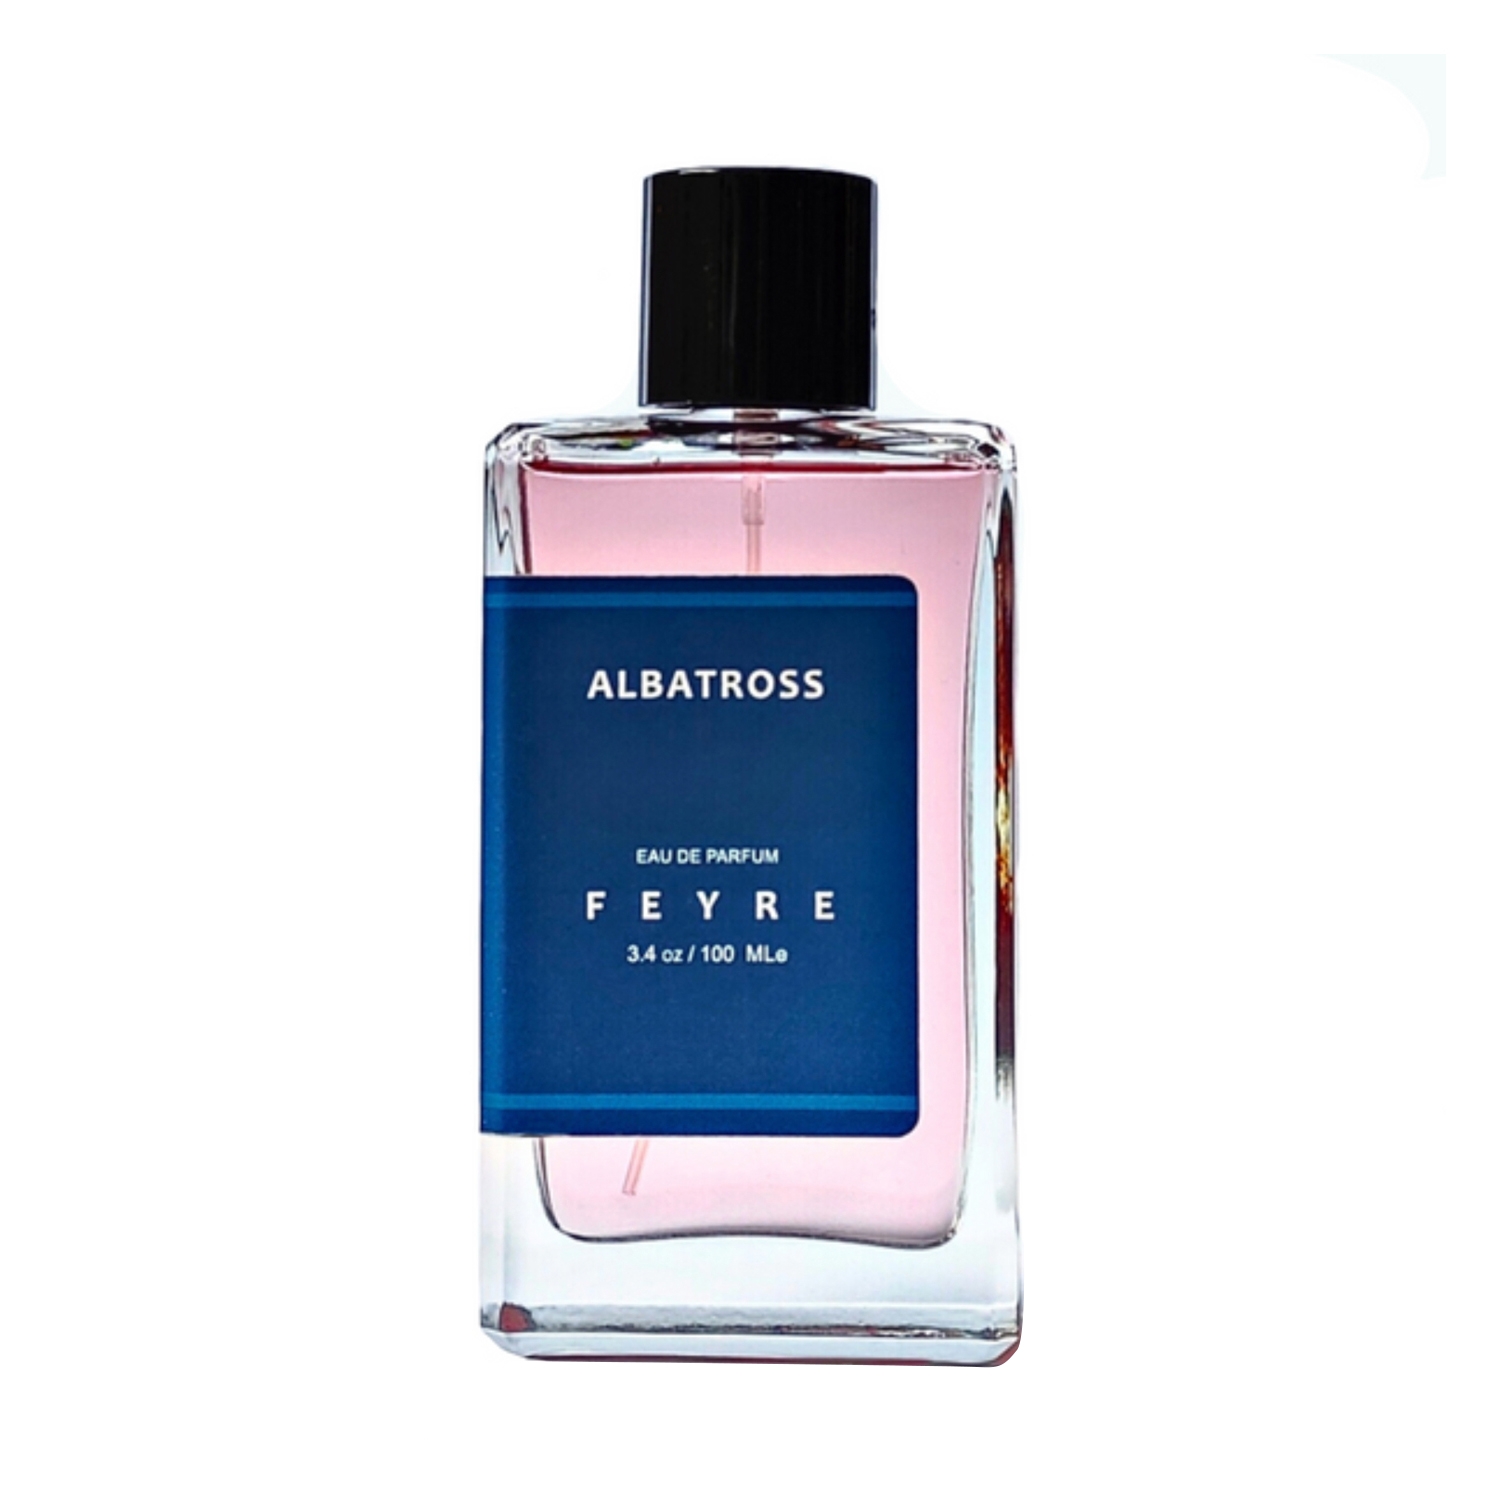 ALBATROSS Feyre Eau De Parfum (100ml)